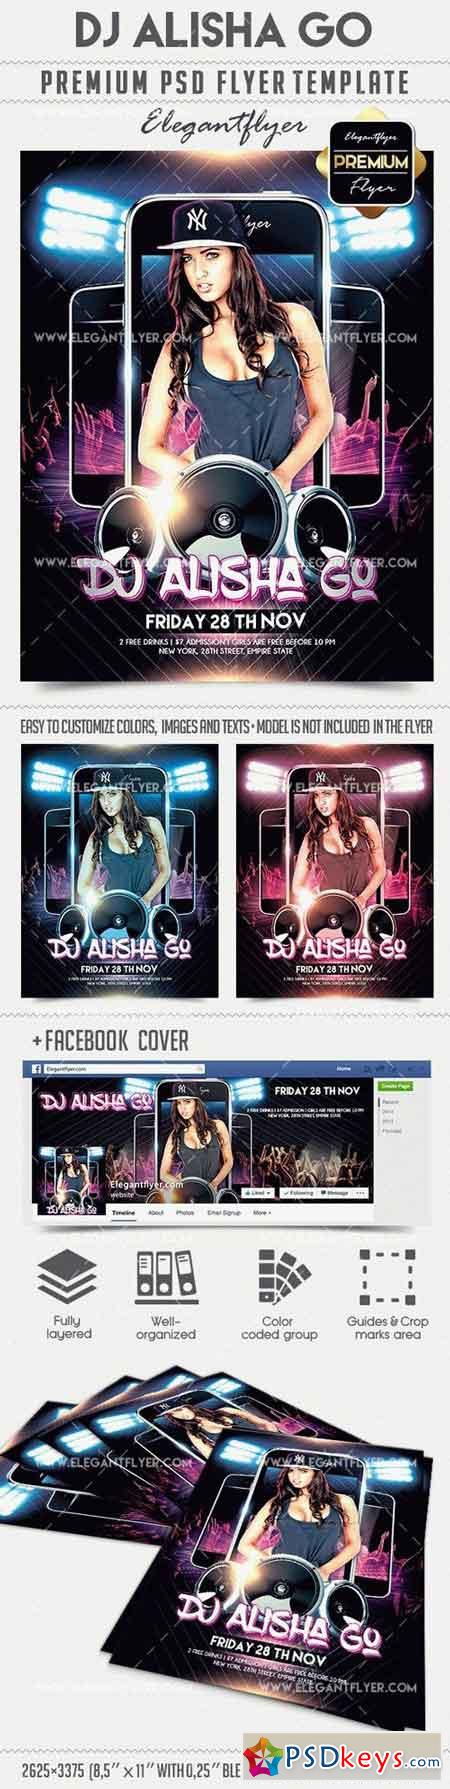 DJ Alisha Go  Flyer PSD Template + Facebook Cover